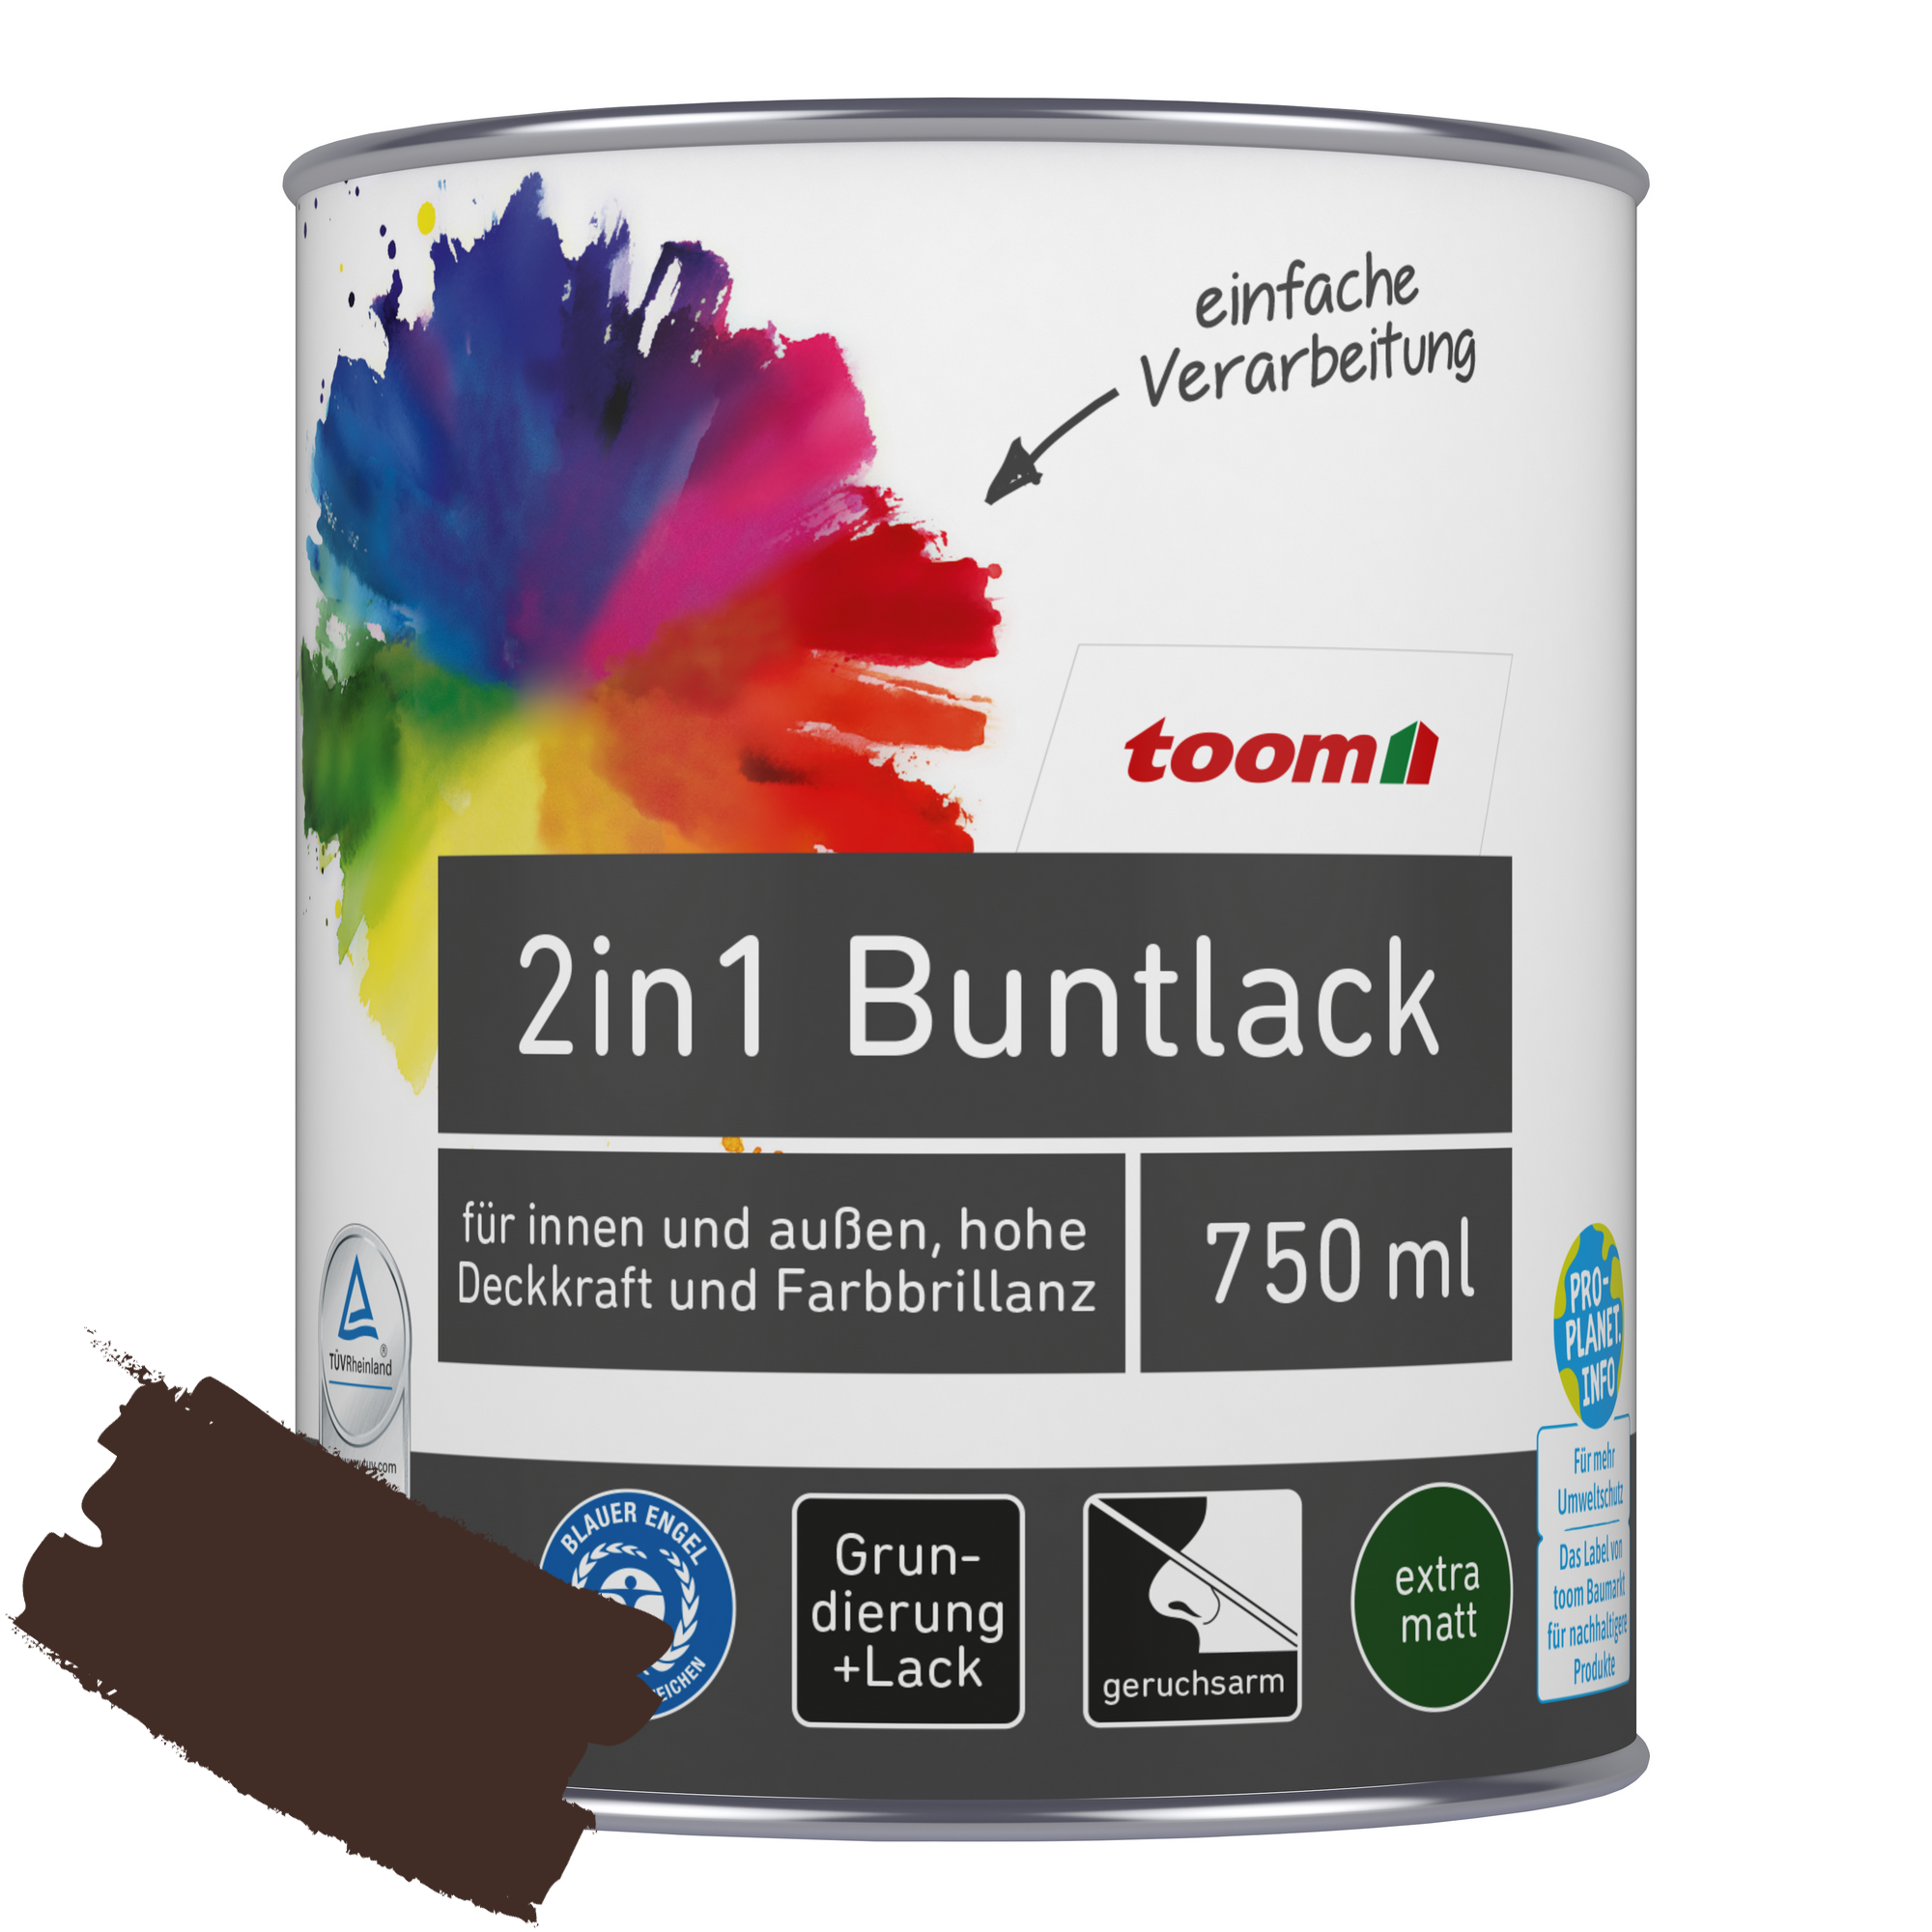 2in1 Buntlack 'Edelbraun' schokobraun matt 750 ml + product picture